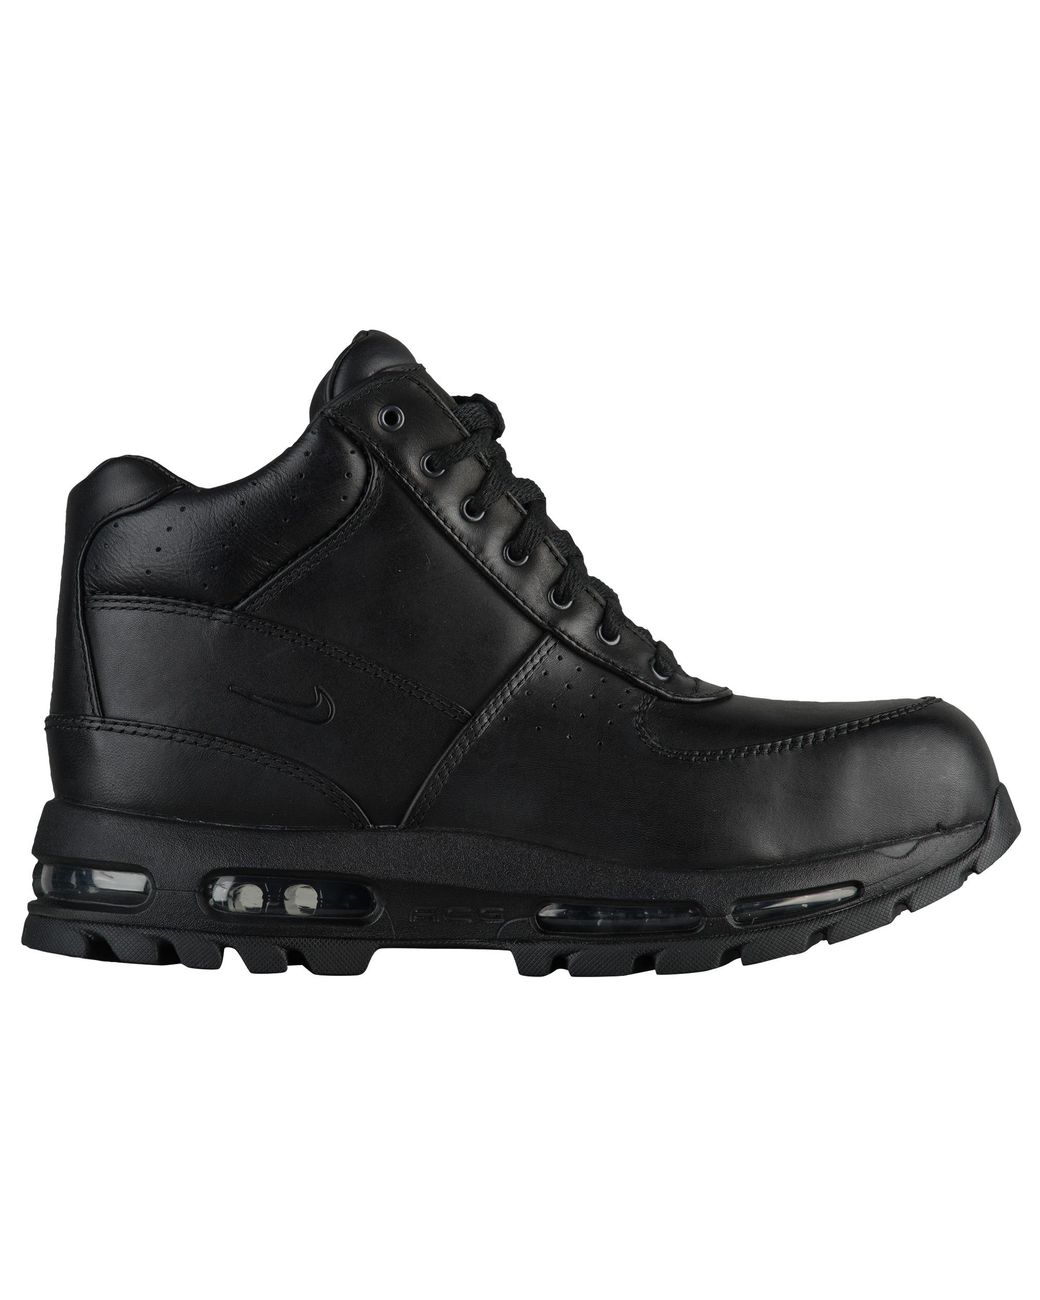 Nike Leather Air Max Goadome Boots in Black,Black,Black (Black ... سيفورا امريكا